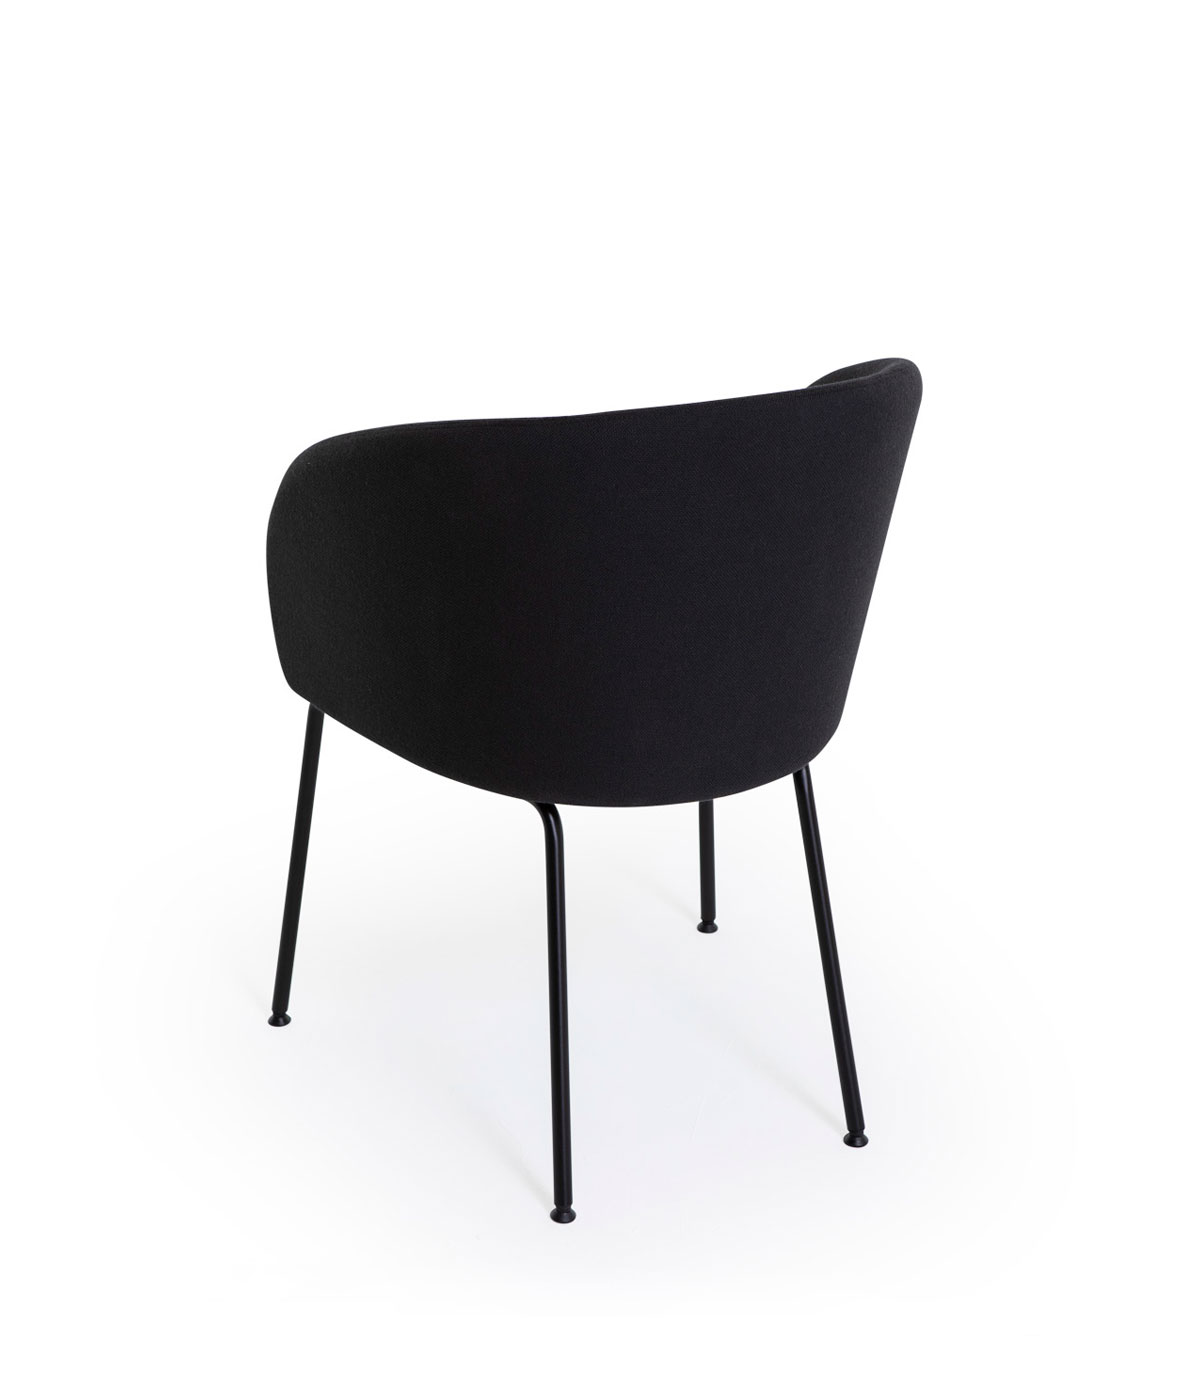 Cistell Original chair with armrests and metallic legs - Vergés